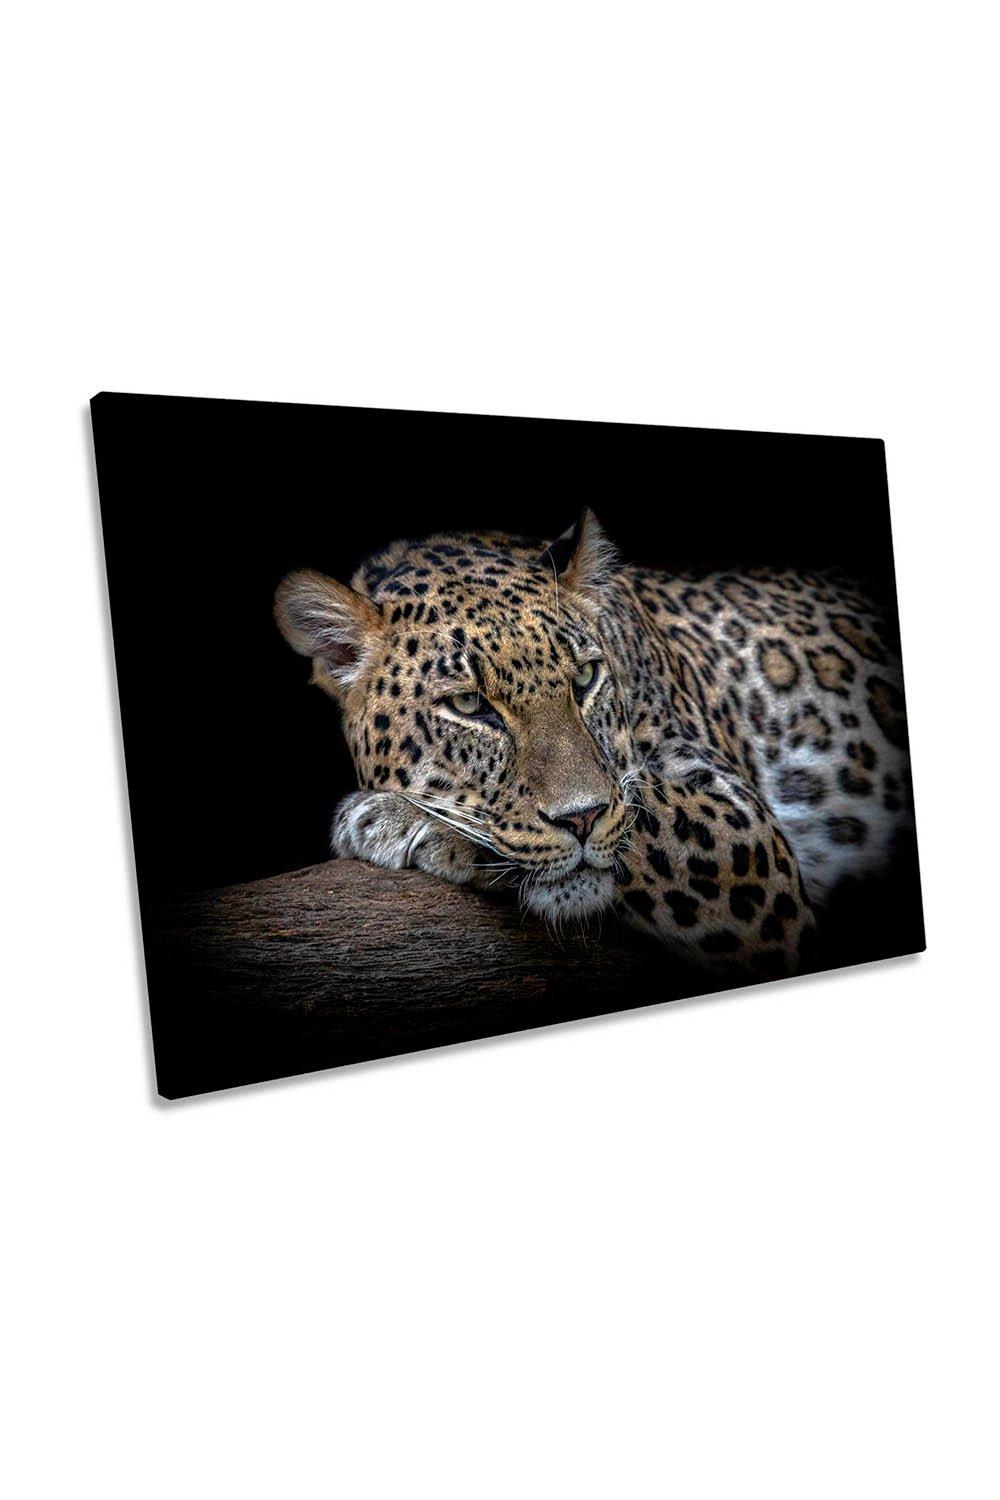 Leopard Resting Black Canvas Wall Art Picture Print